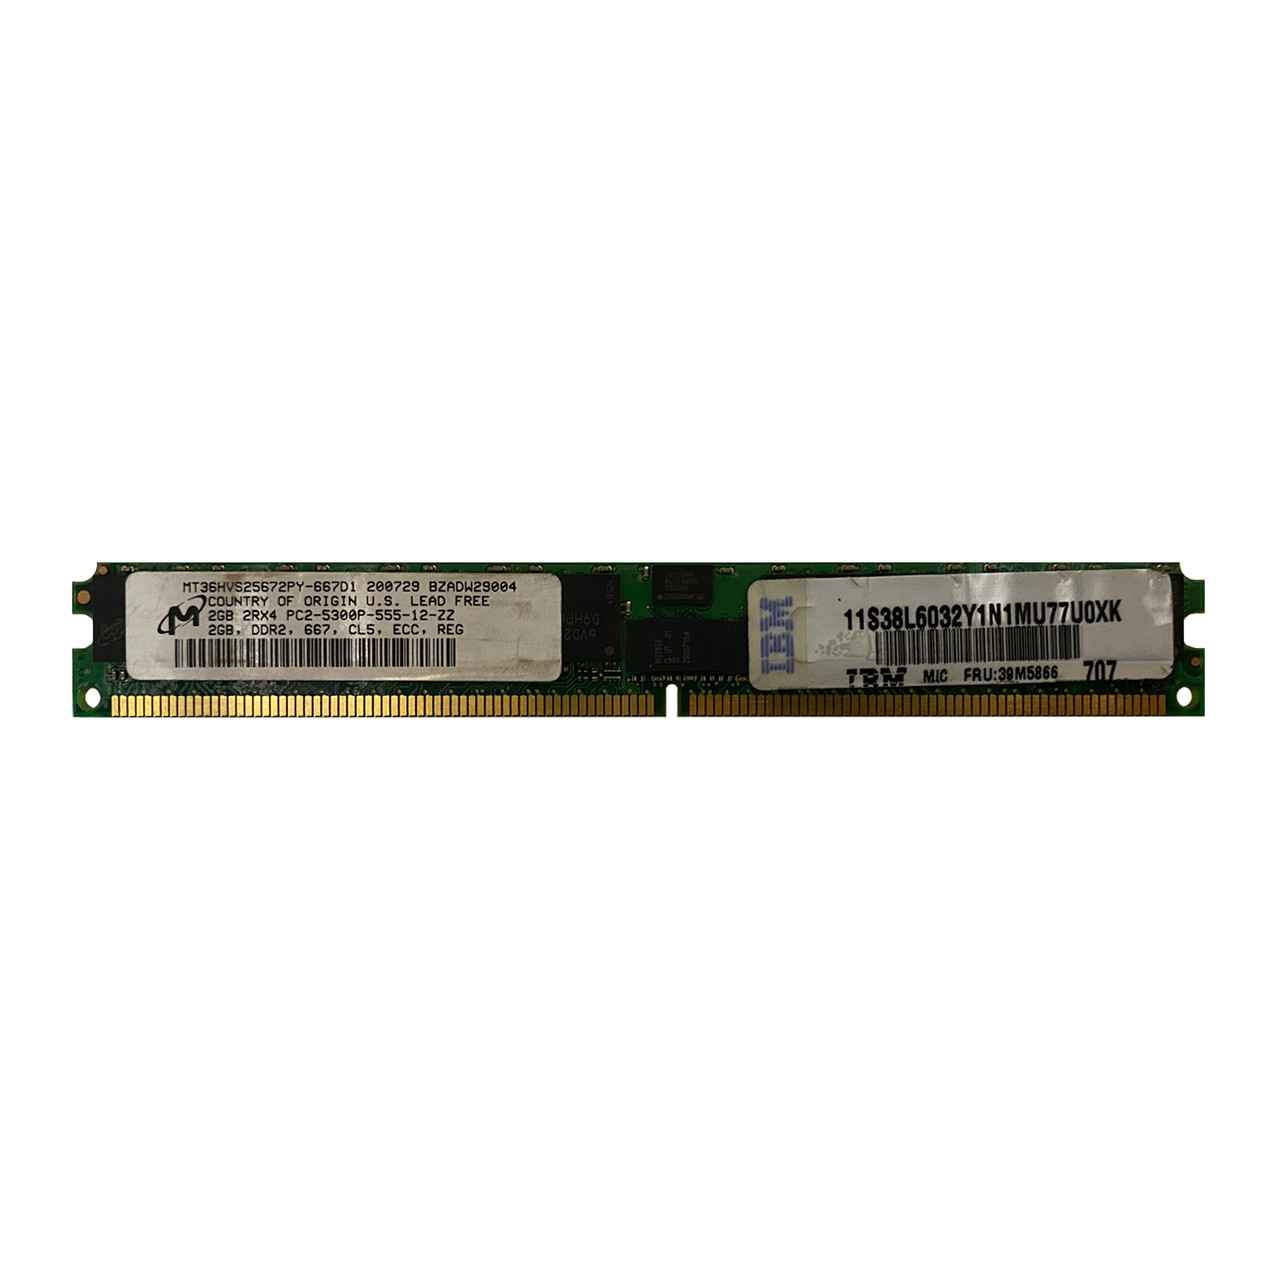 IBM 39M5866 2GB PC2-5300 DDR2 VLP Memory Module 38L6032